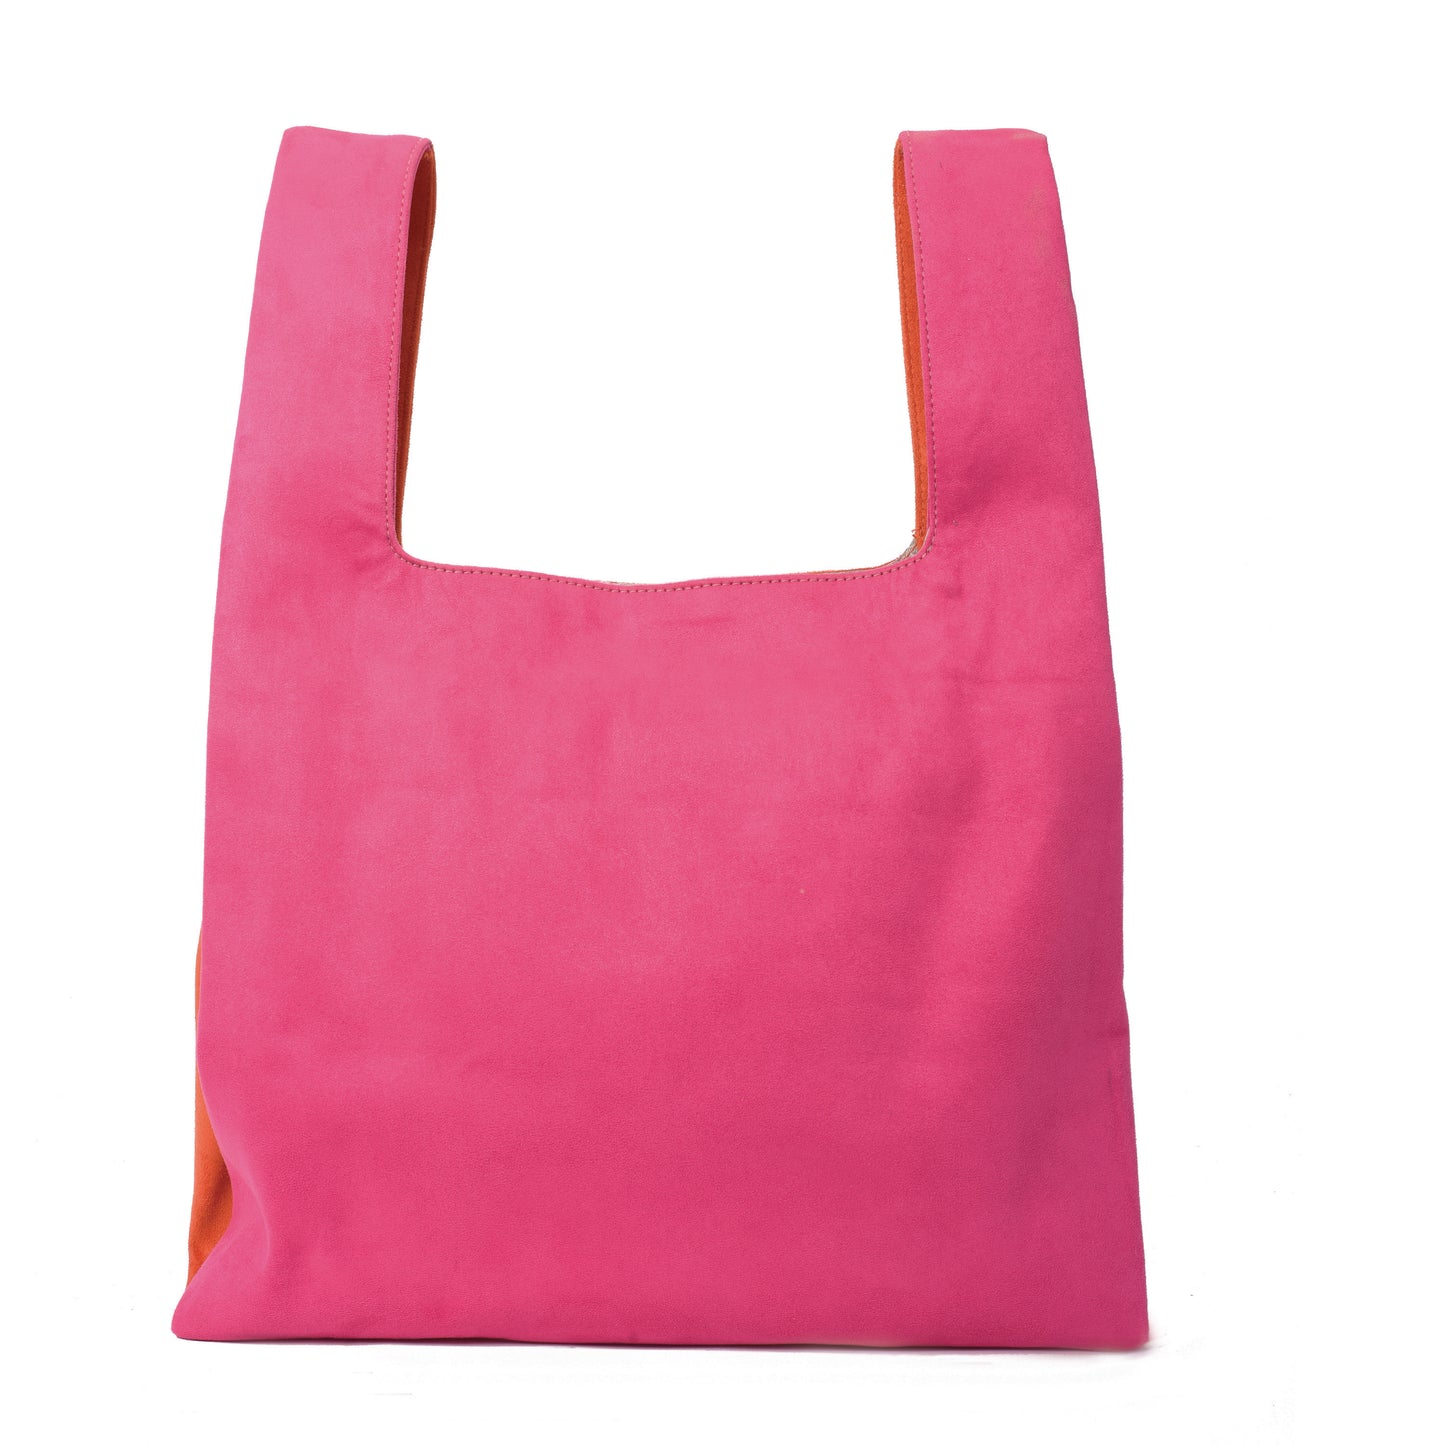 Knot Orange/Pink Handbag with Humming bird embroidery - Code 923